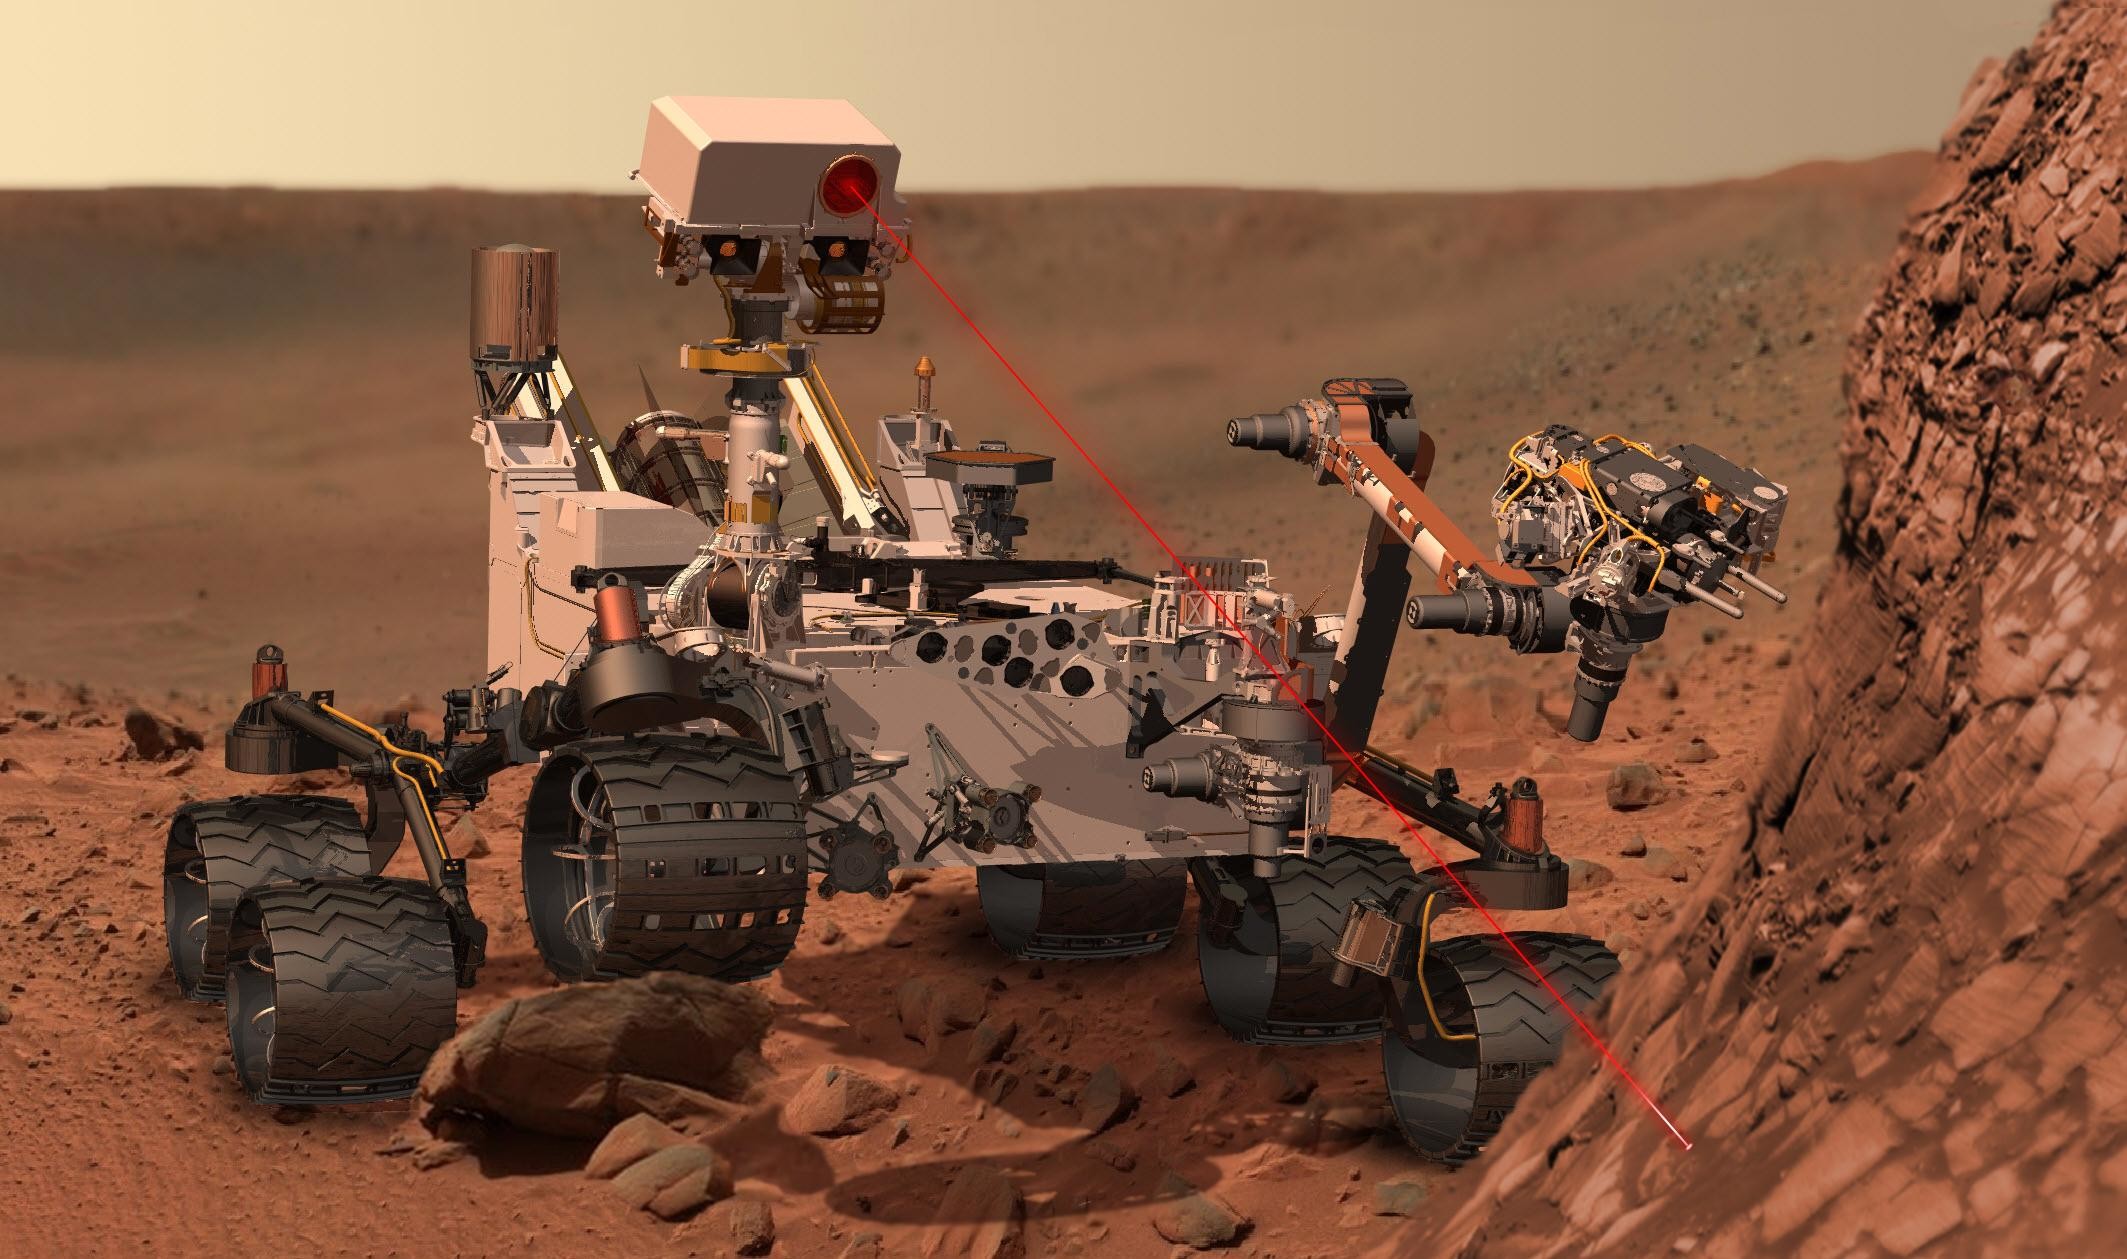 Марсоход&nbsp;Curiosity.&nbsp;Фото &copy;&nbsp;Flickr/NASA Goddard Space Flight Center


